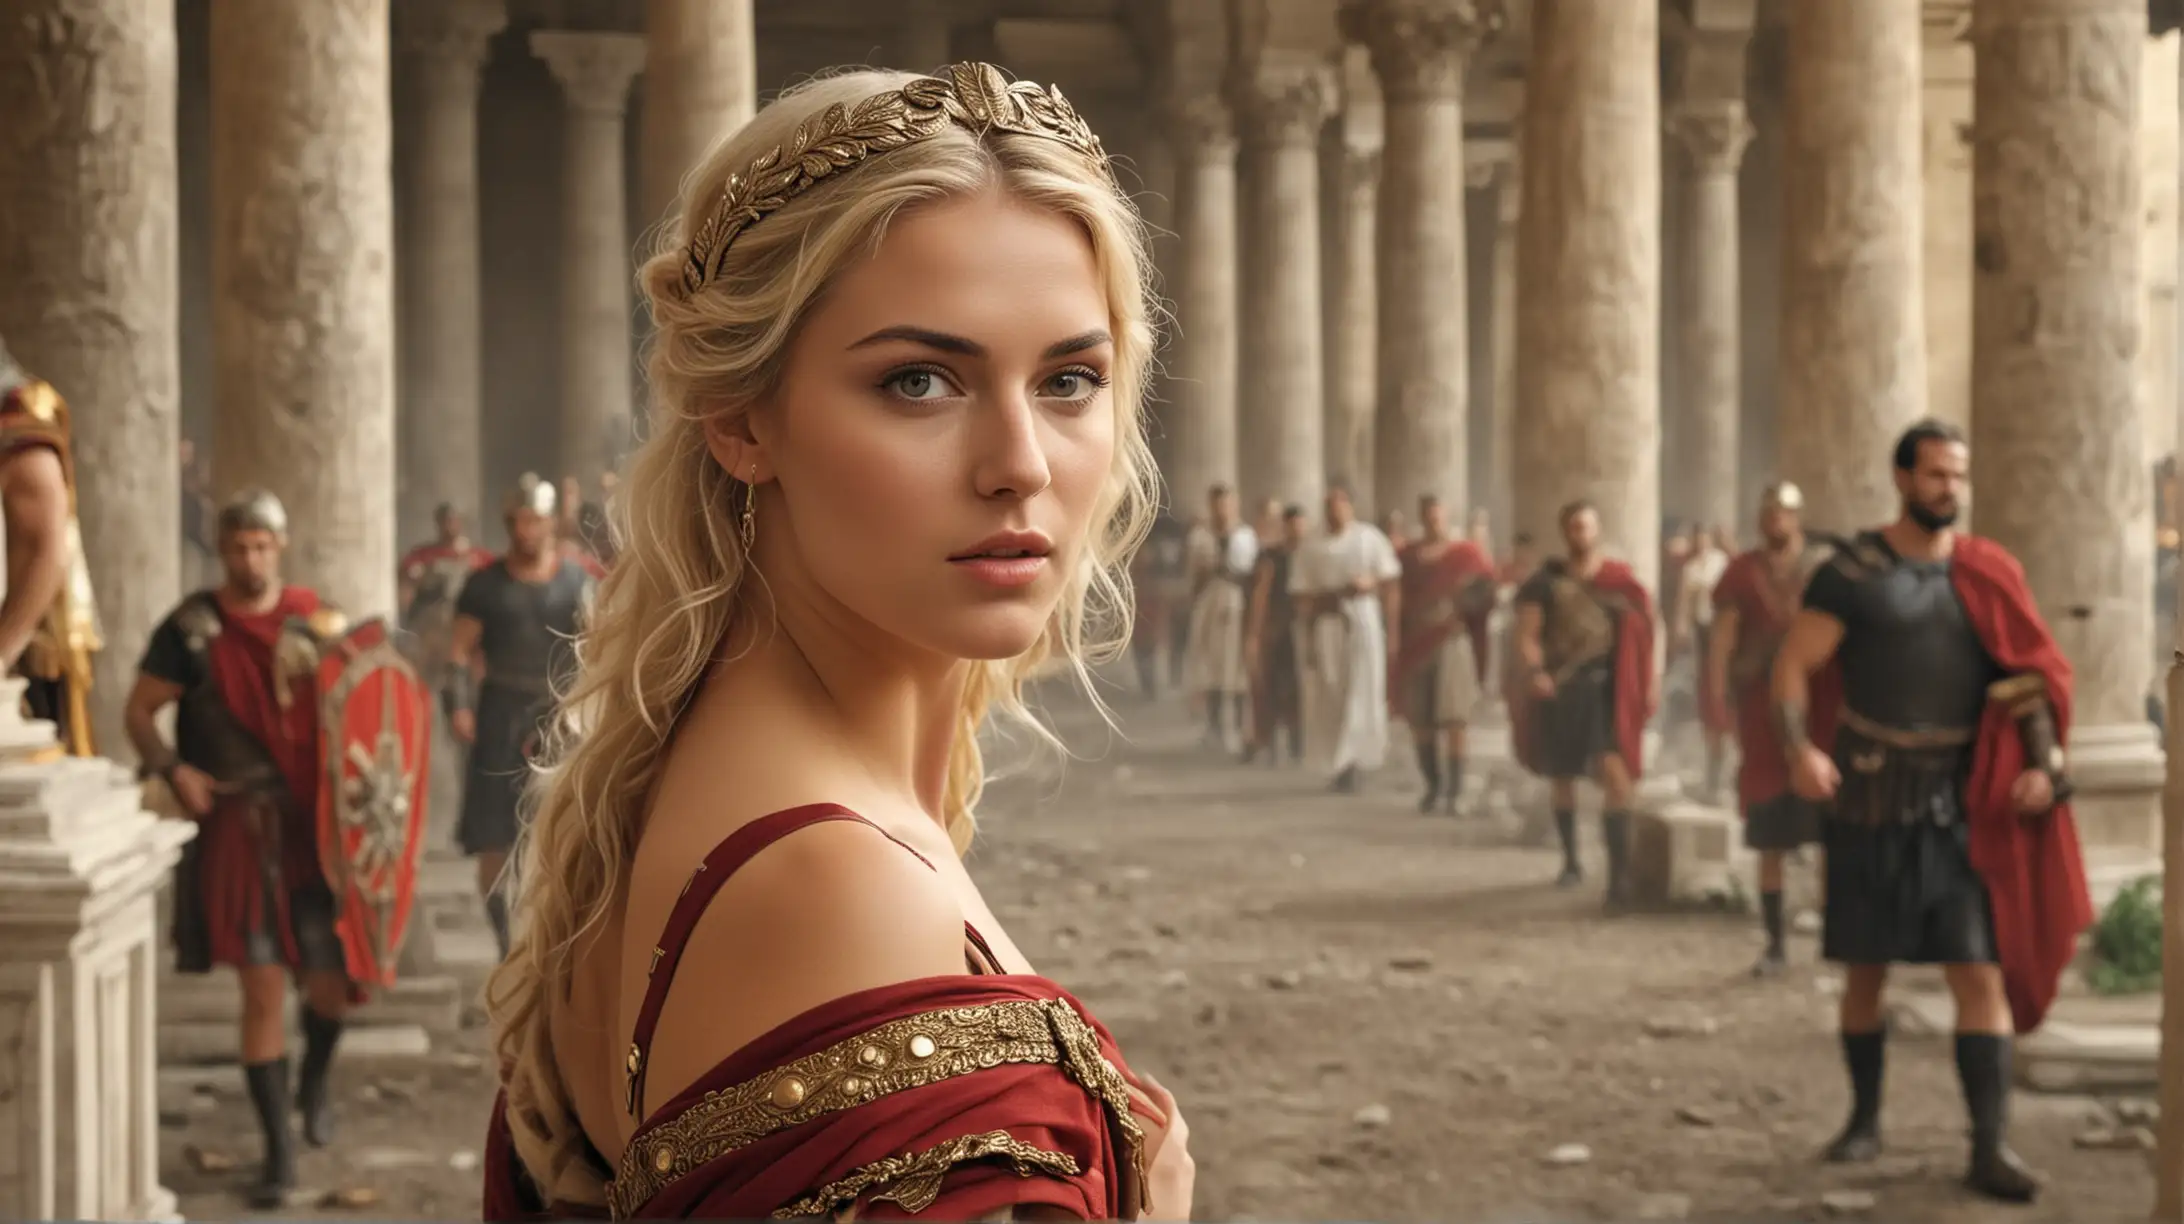 
Background:  beautiful blonde woman roman empire , show men behind her